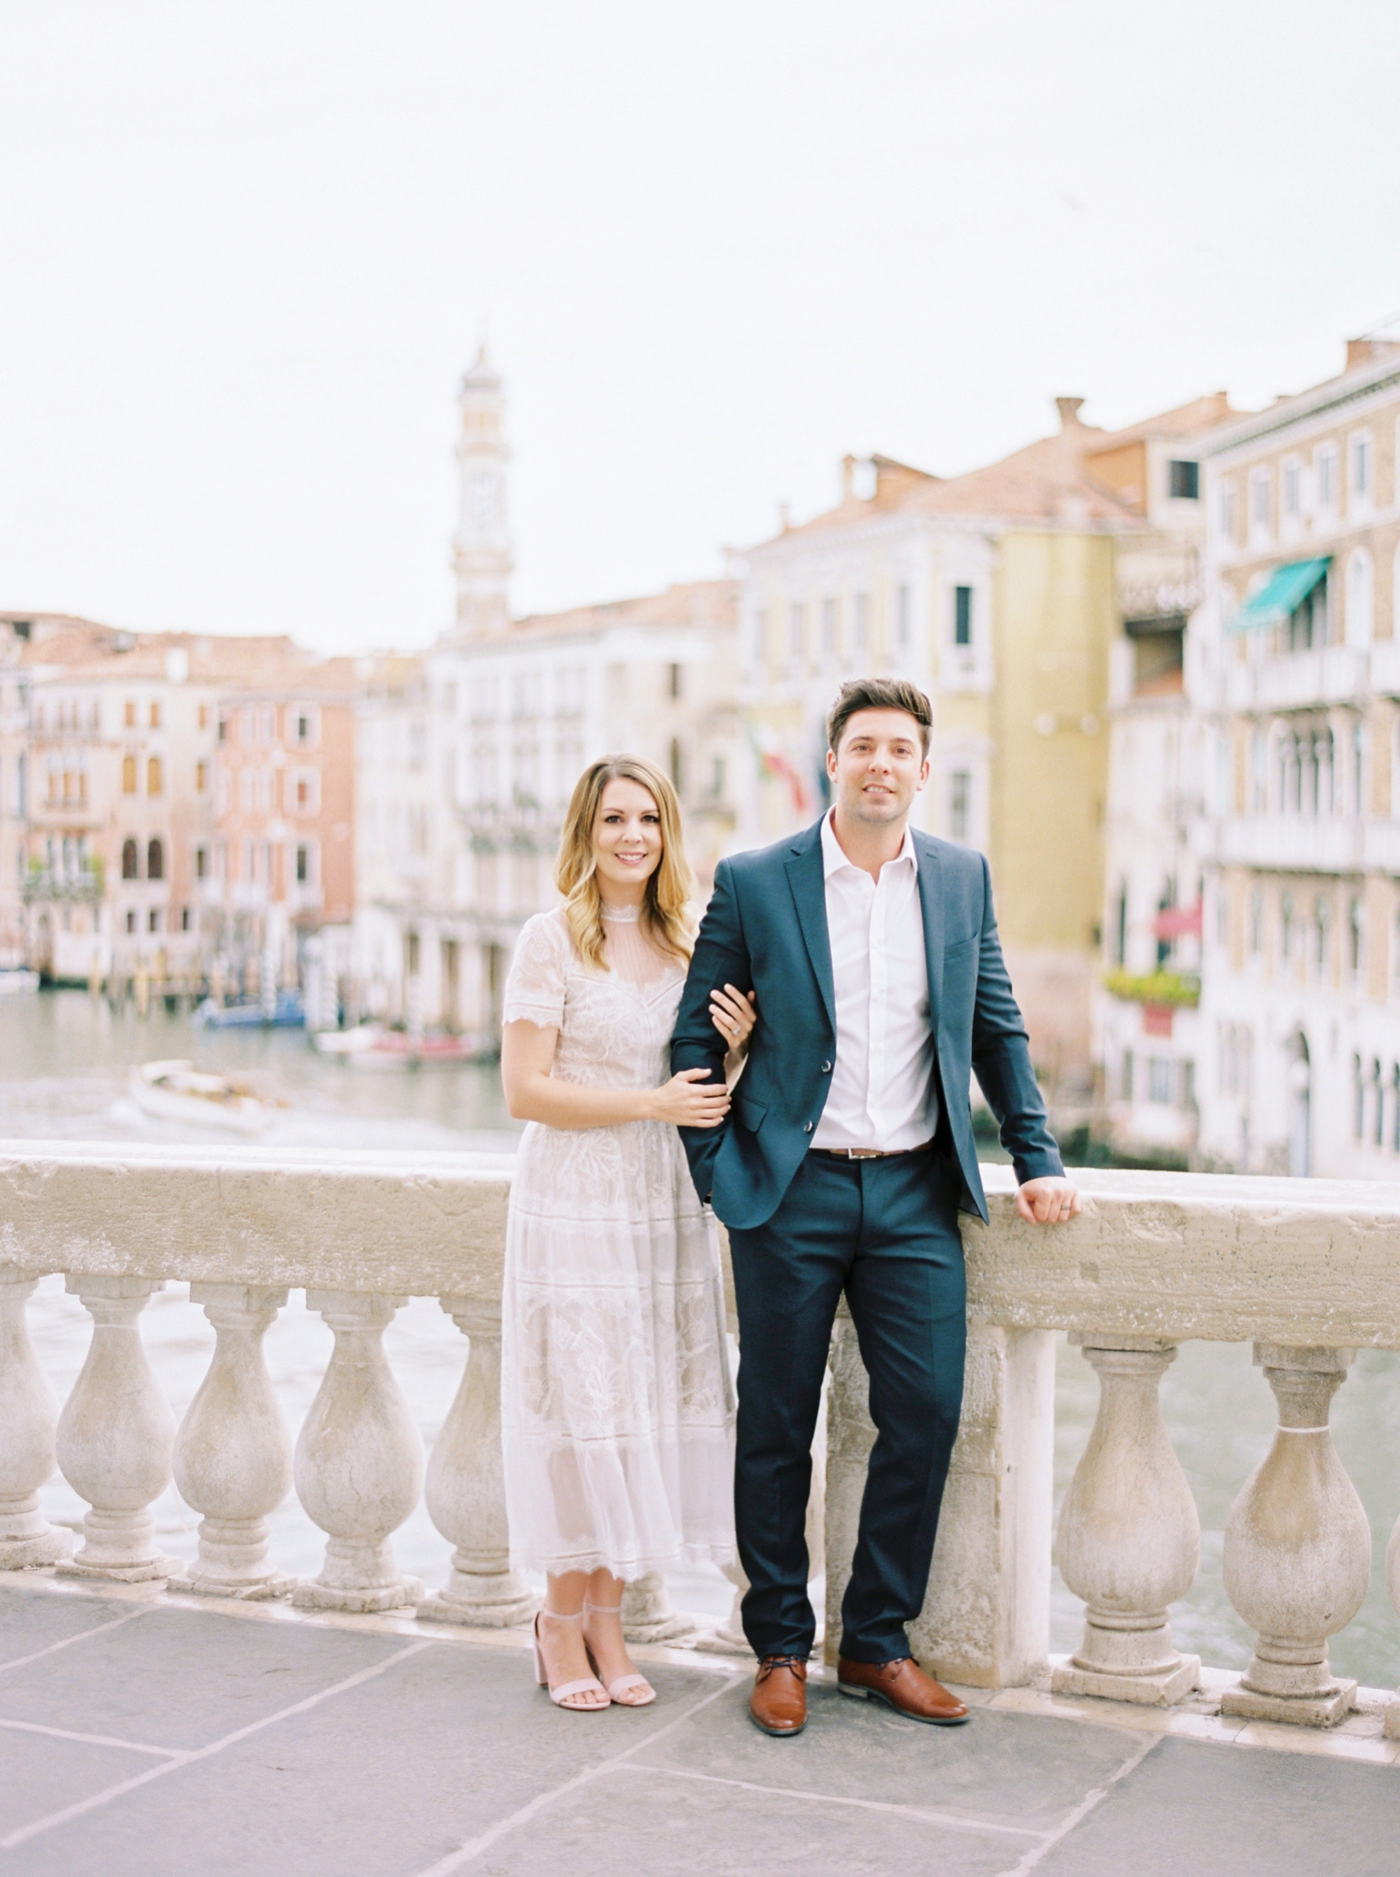 Venice couples anniversary session | pre wedding photos around the venice canals | fine art film photographer Justine Milton